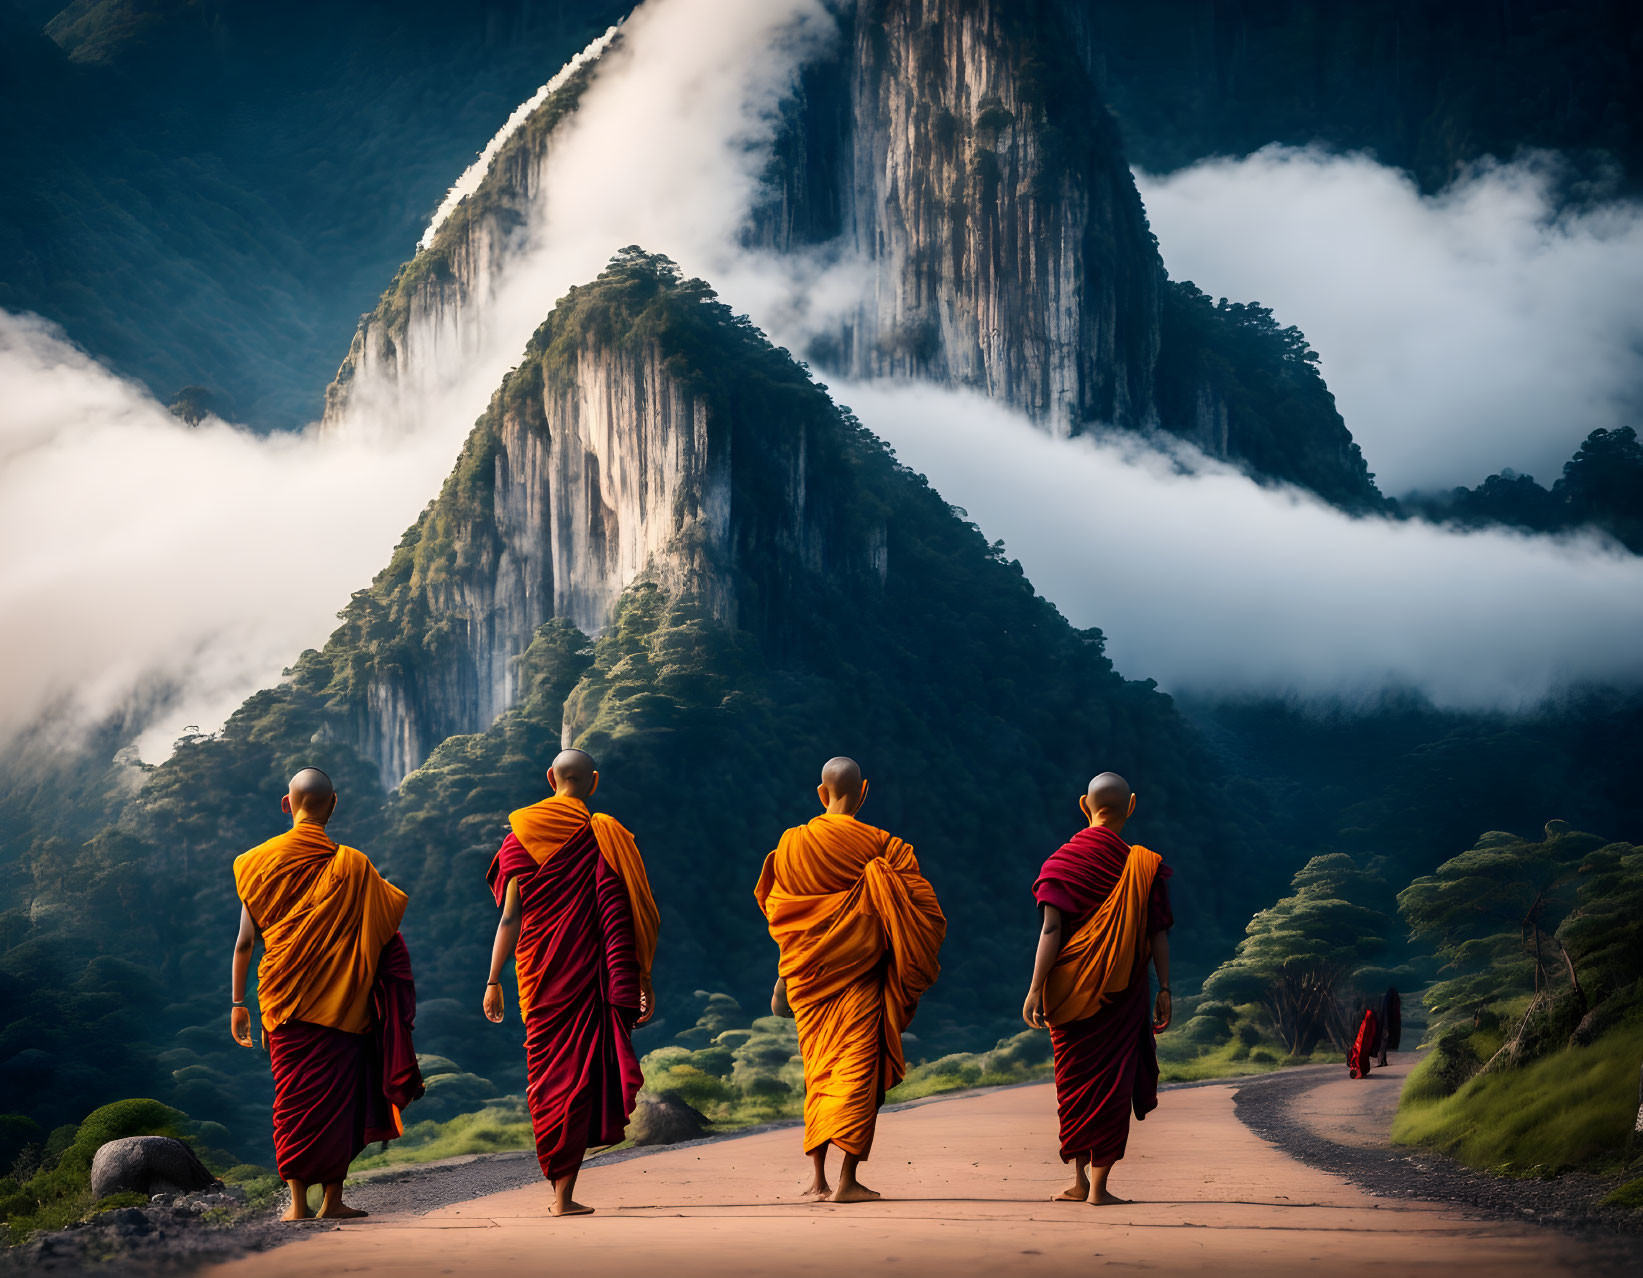 Budhist monks walking towars enlightement